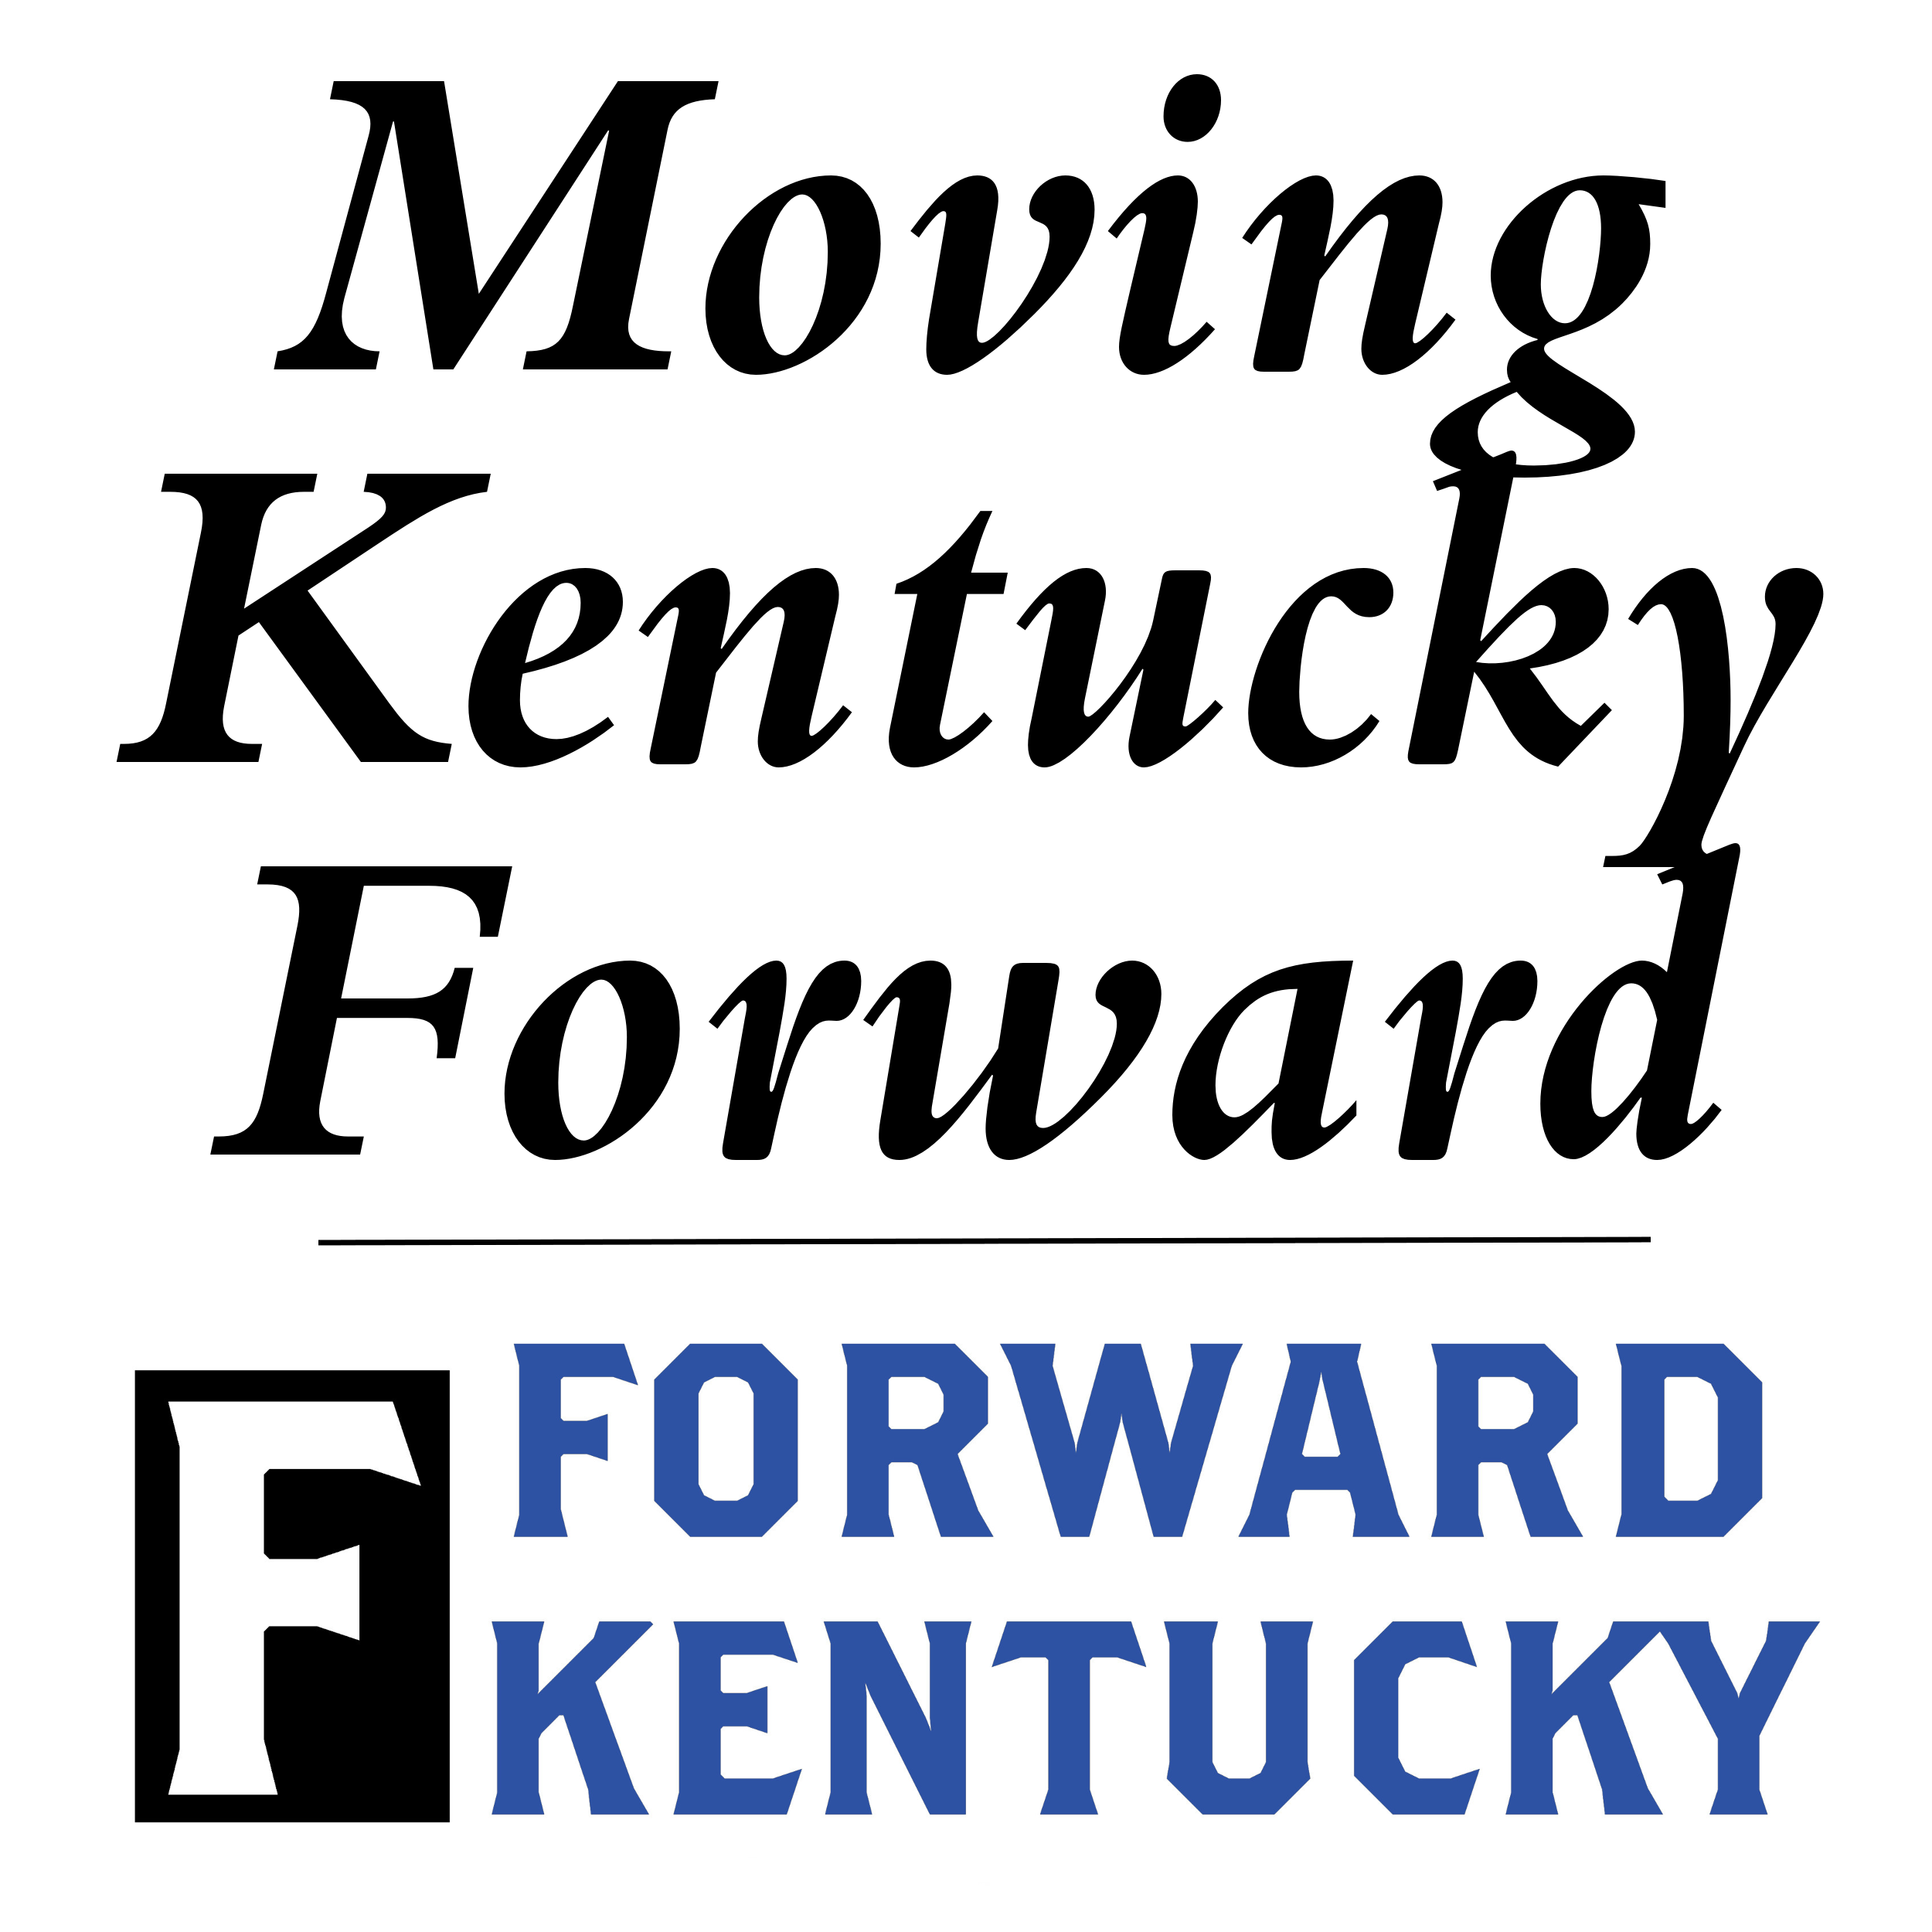 Moving Kentucky Forward